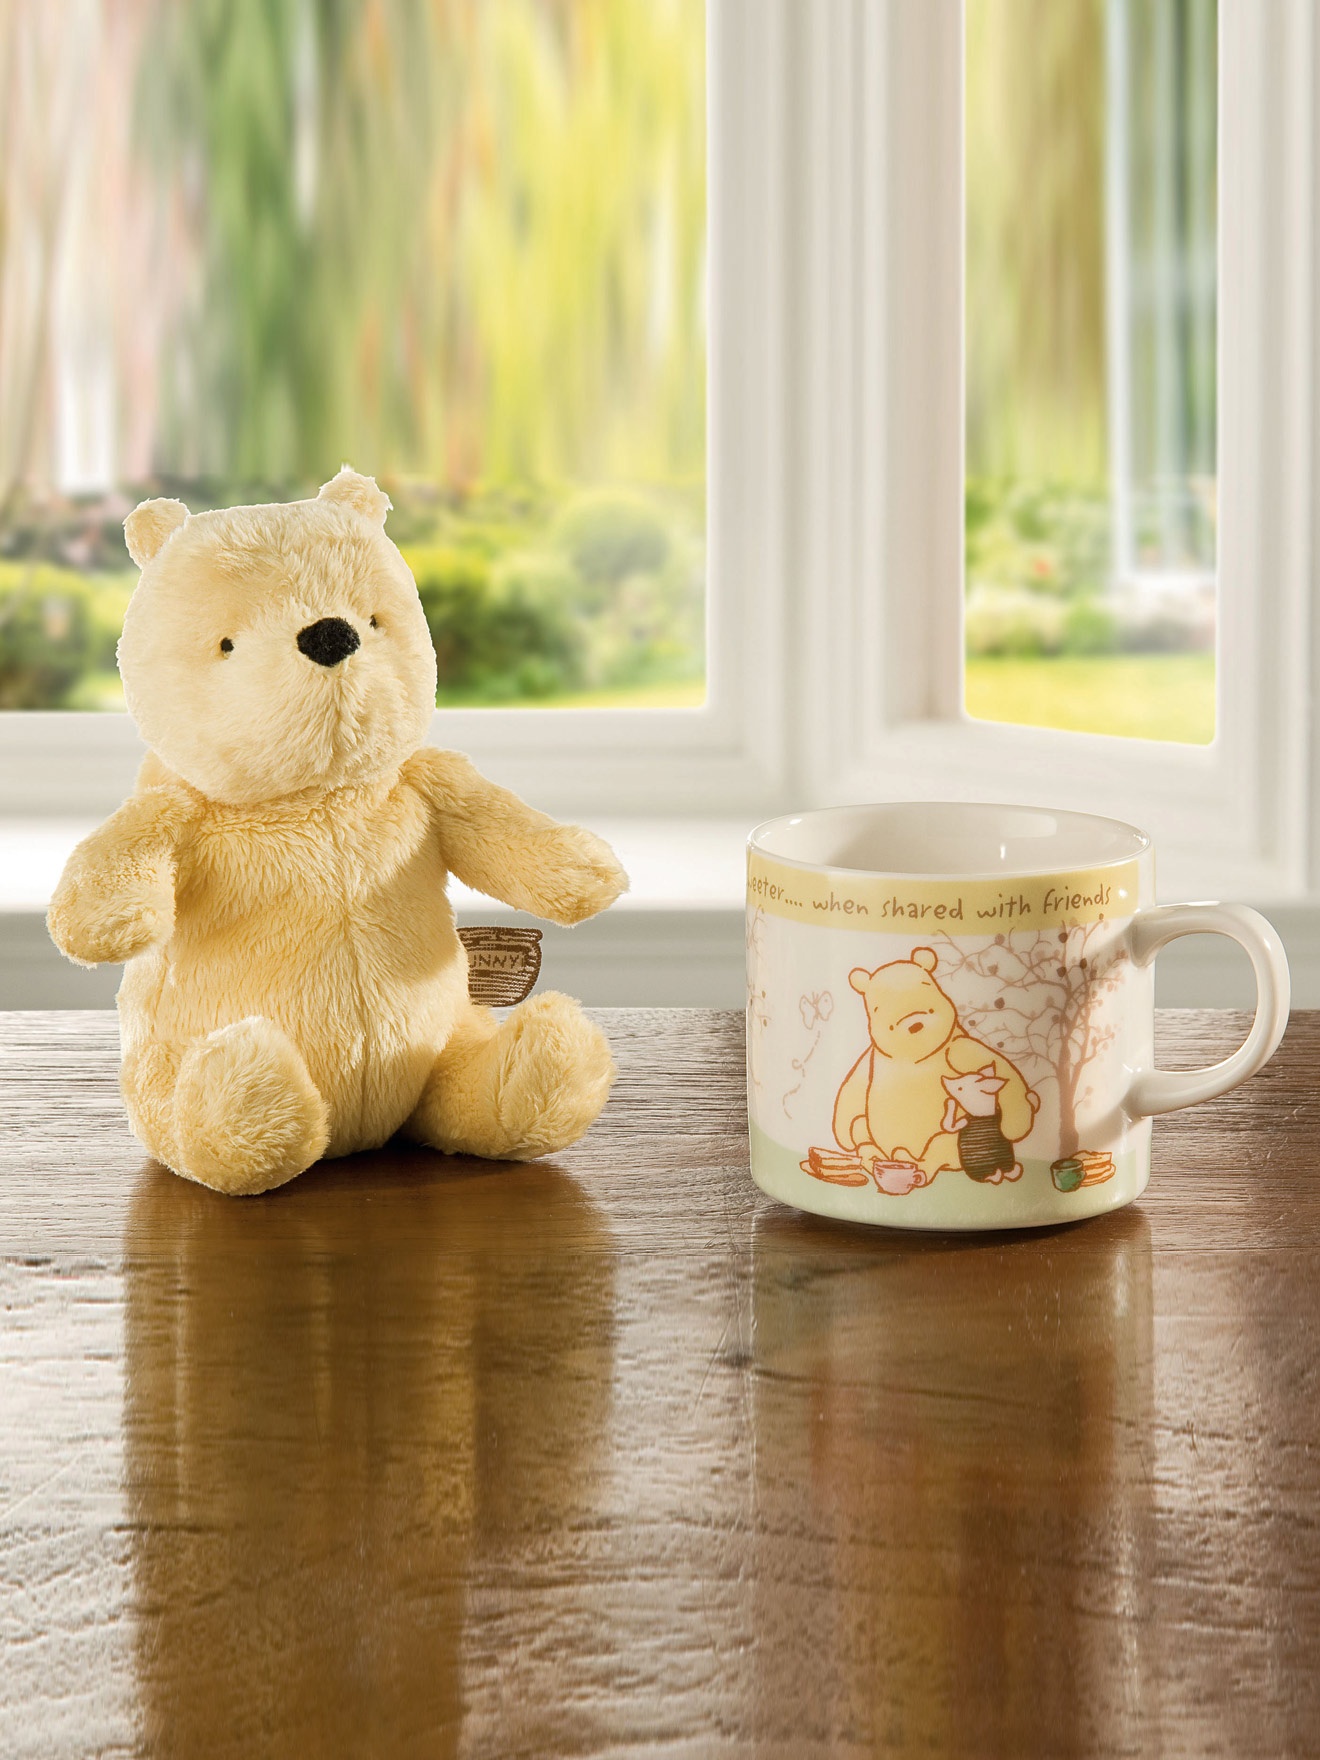 The Pooh Mug and Soft Toy